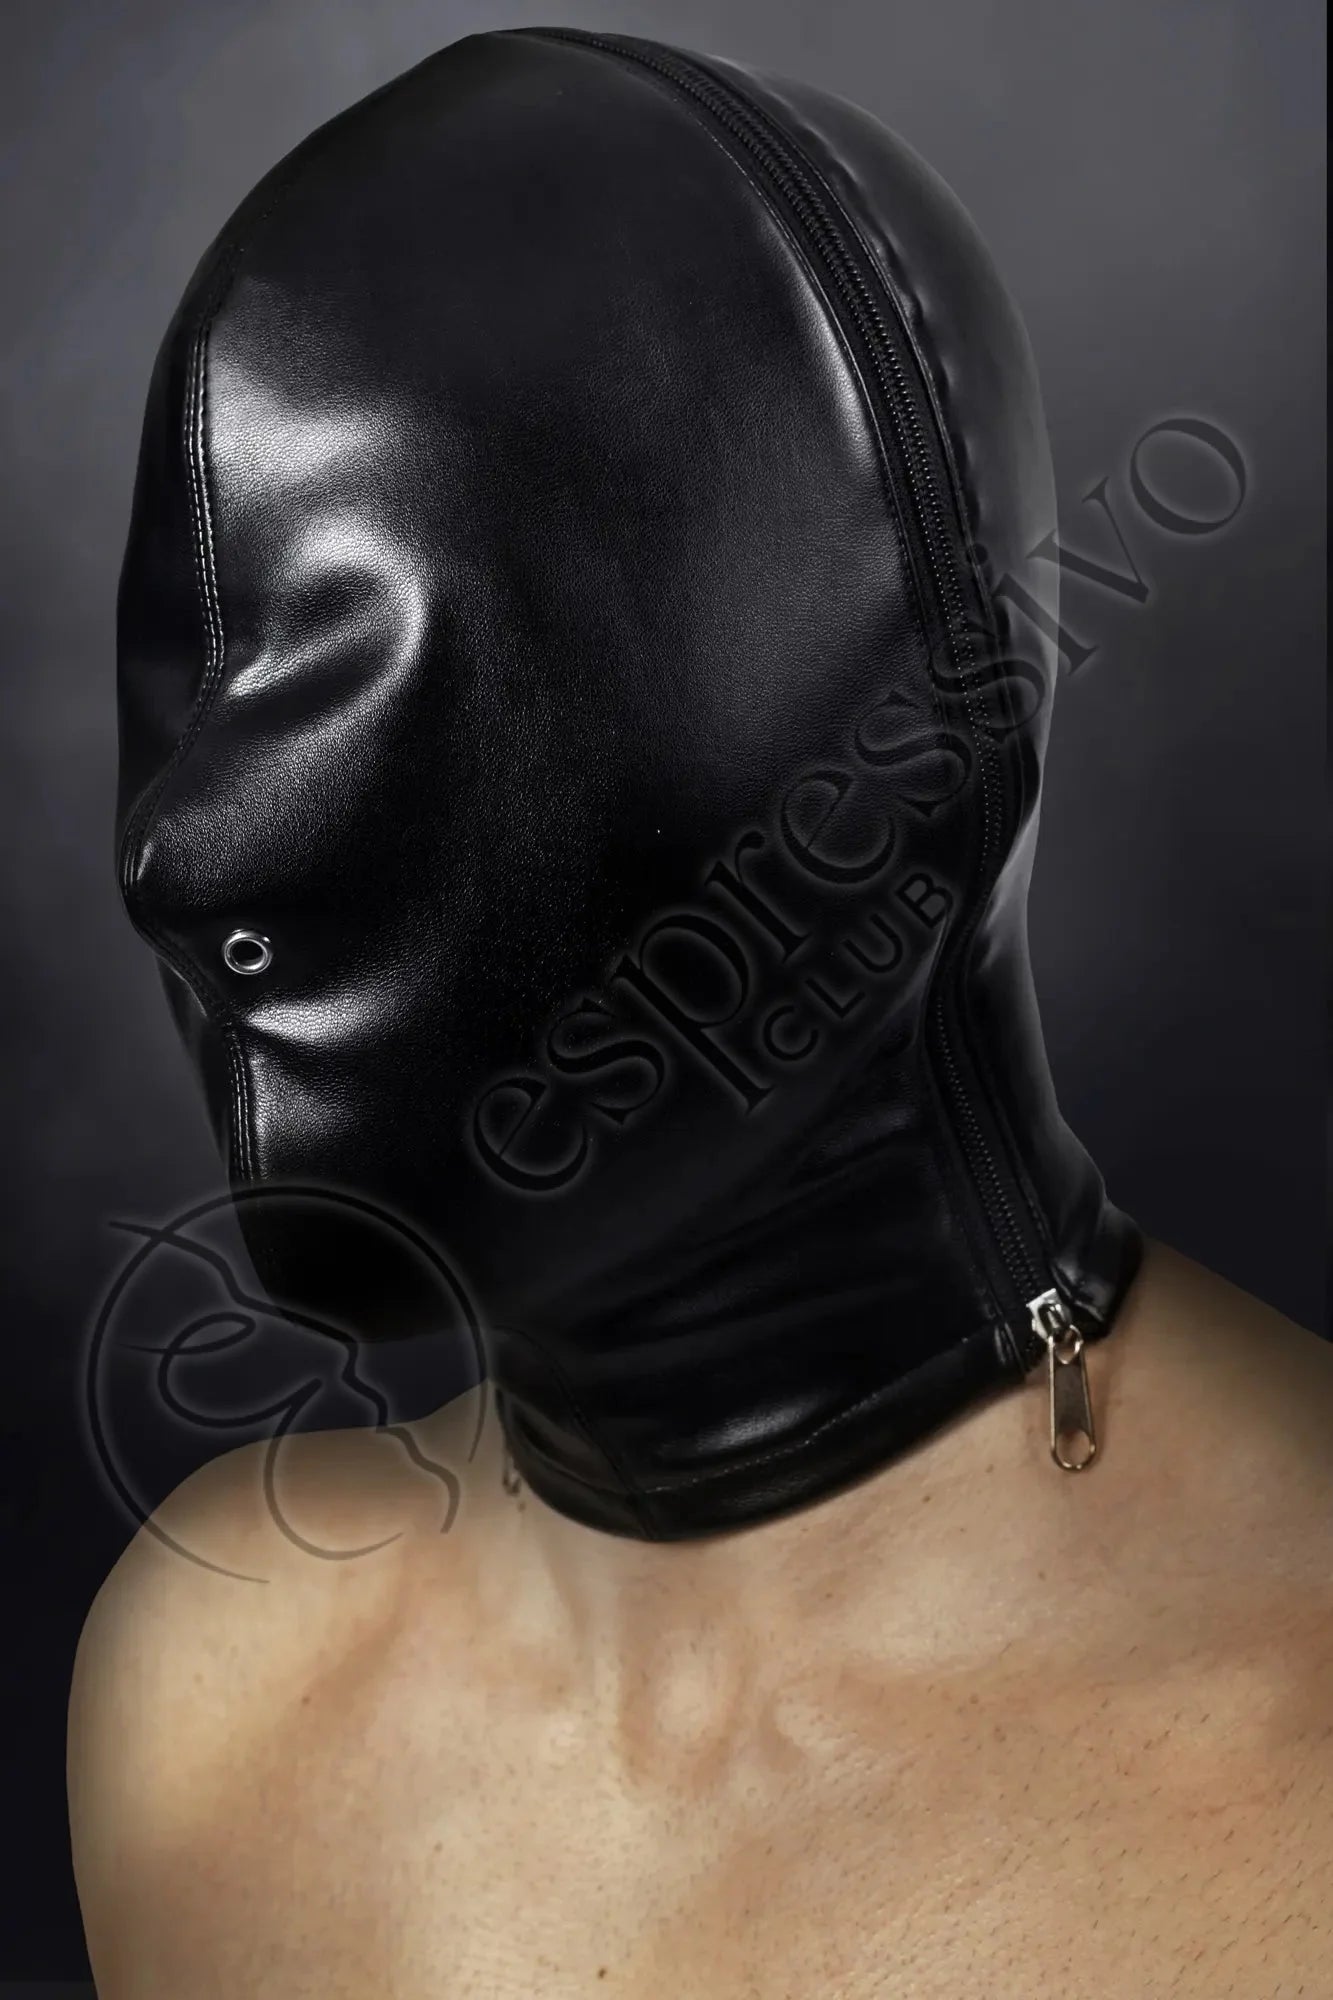 EspressivoClub Black Extreme Bondage Hood For Sensory Deprivation - Leather Lined Masks 190 - 5